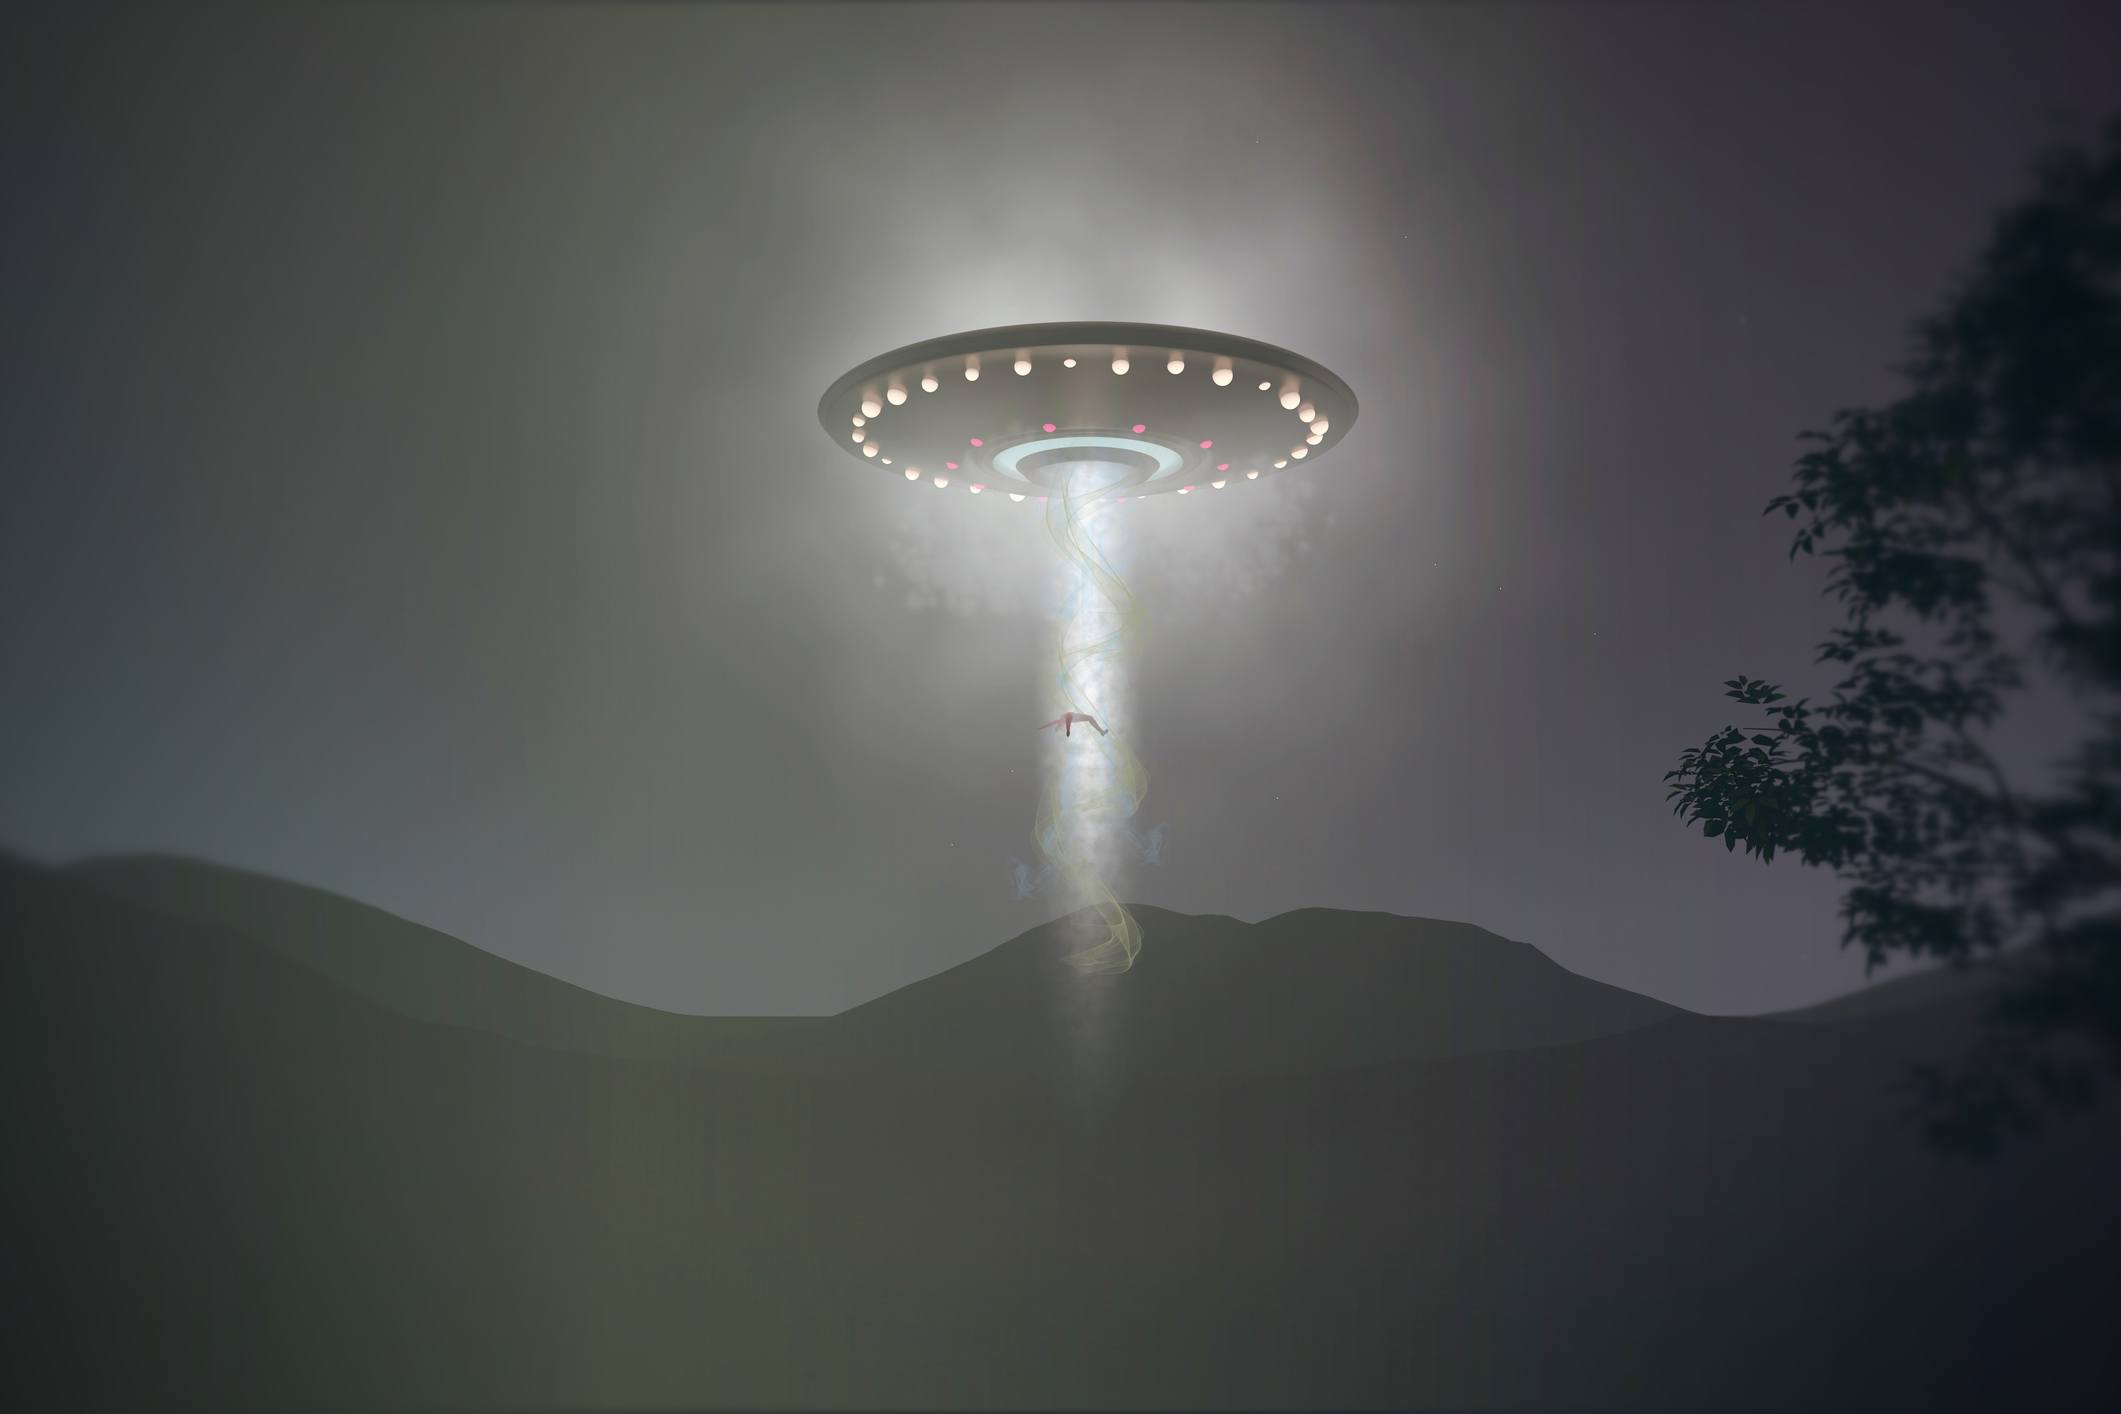 Revealed: The Government’s Secret $22 Million UFO Program